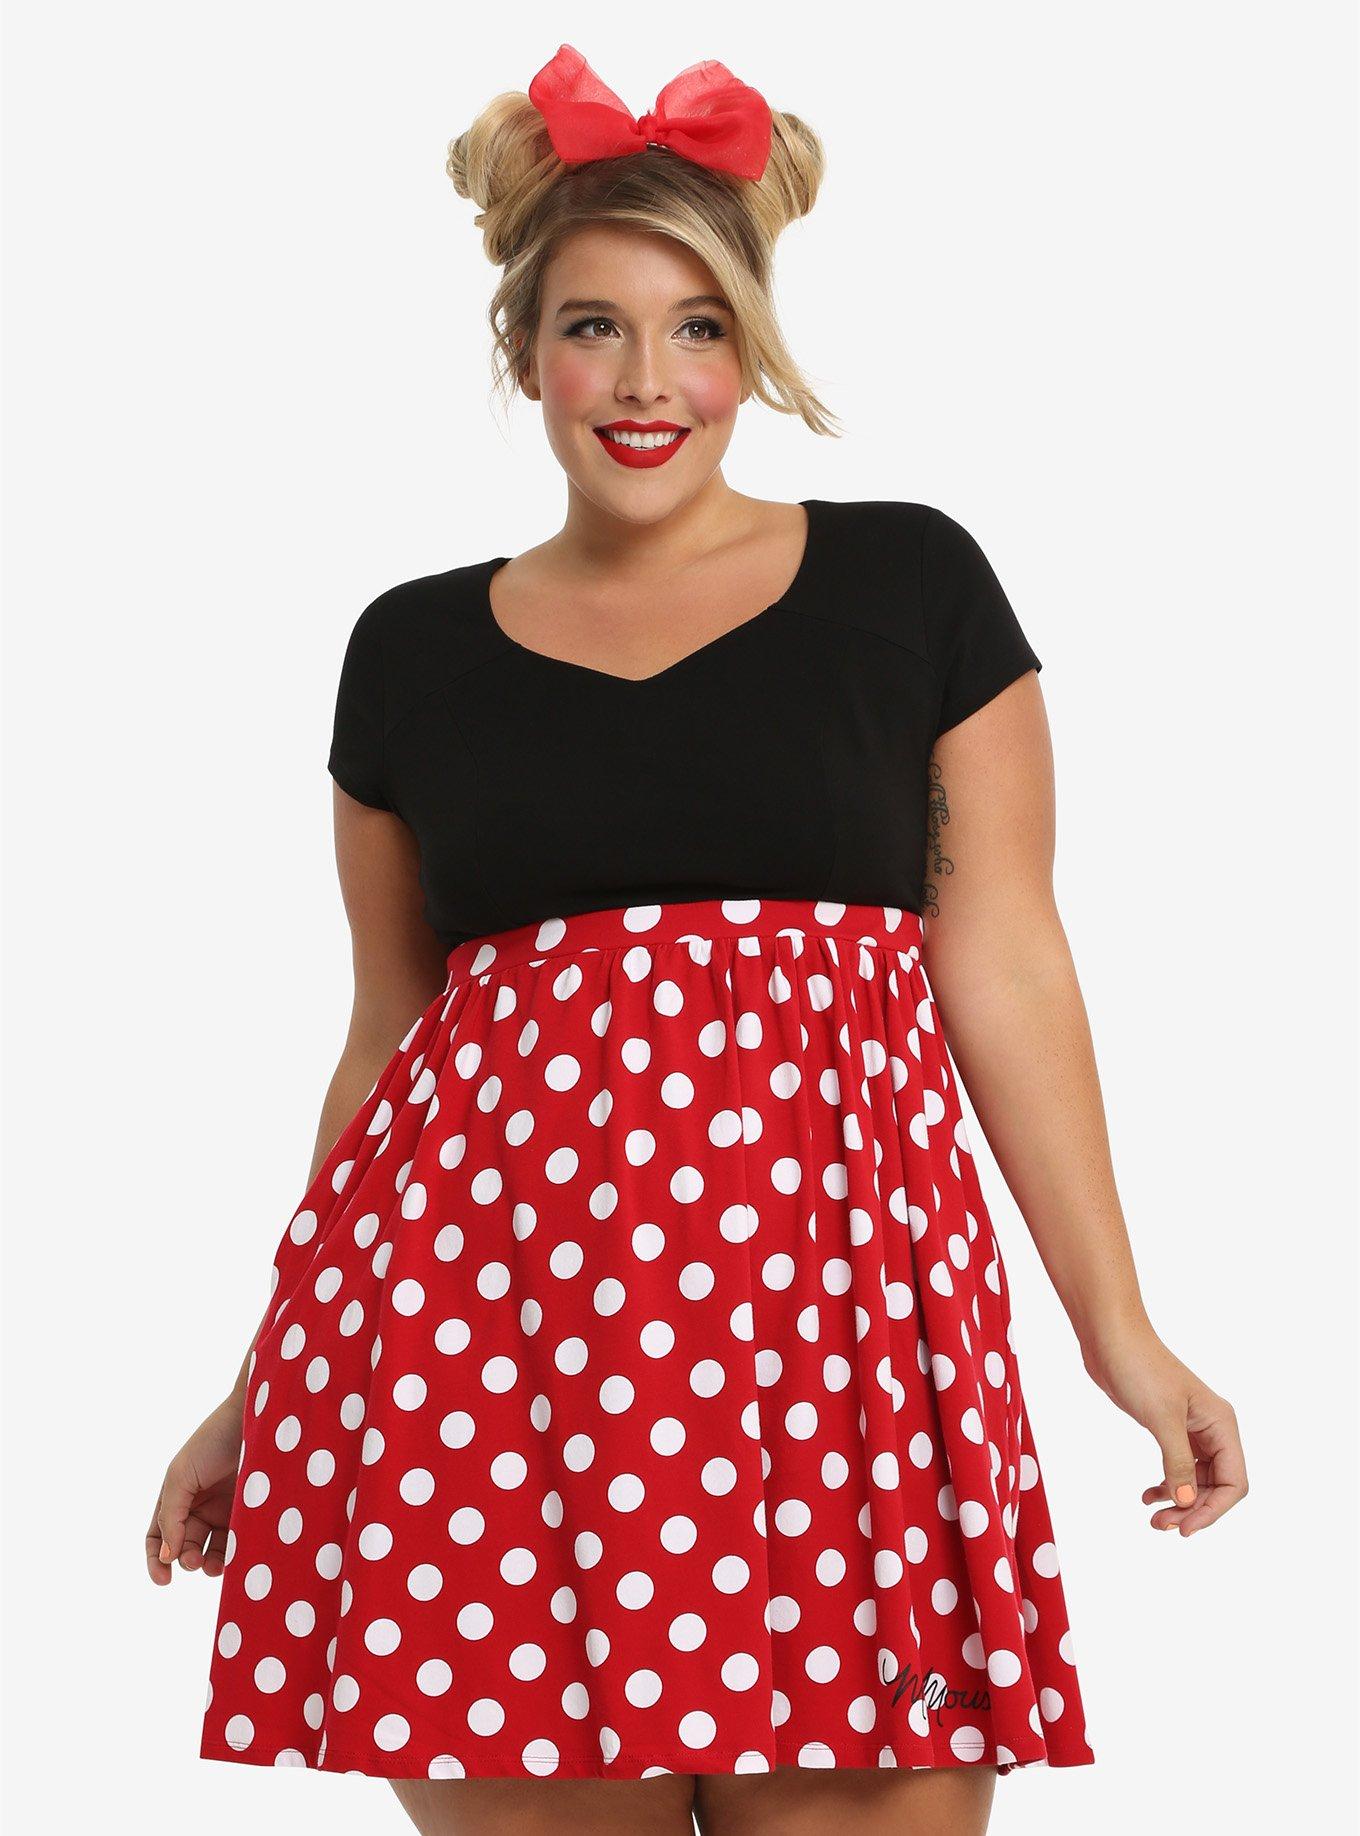 Disney Minnie Mouse Polka Dot Dress Plus Size